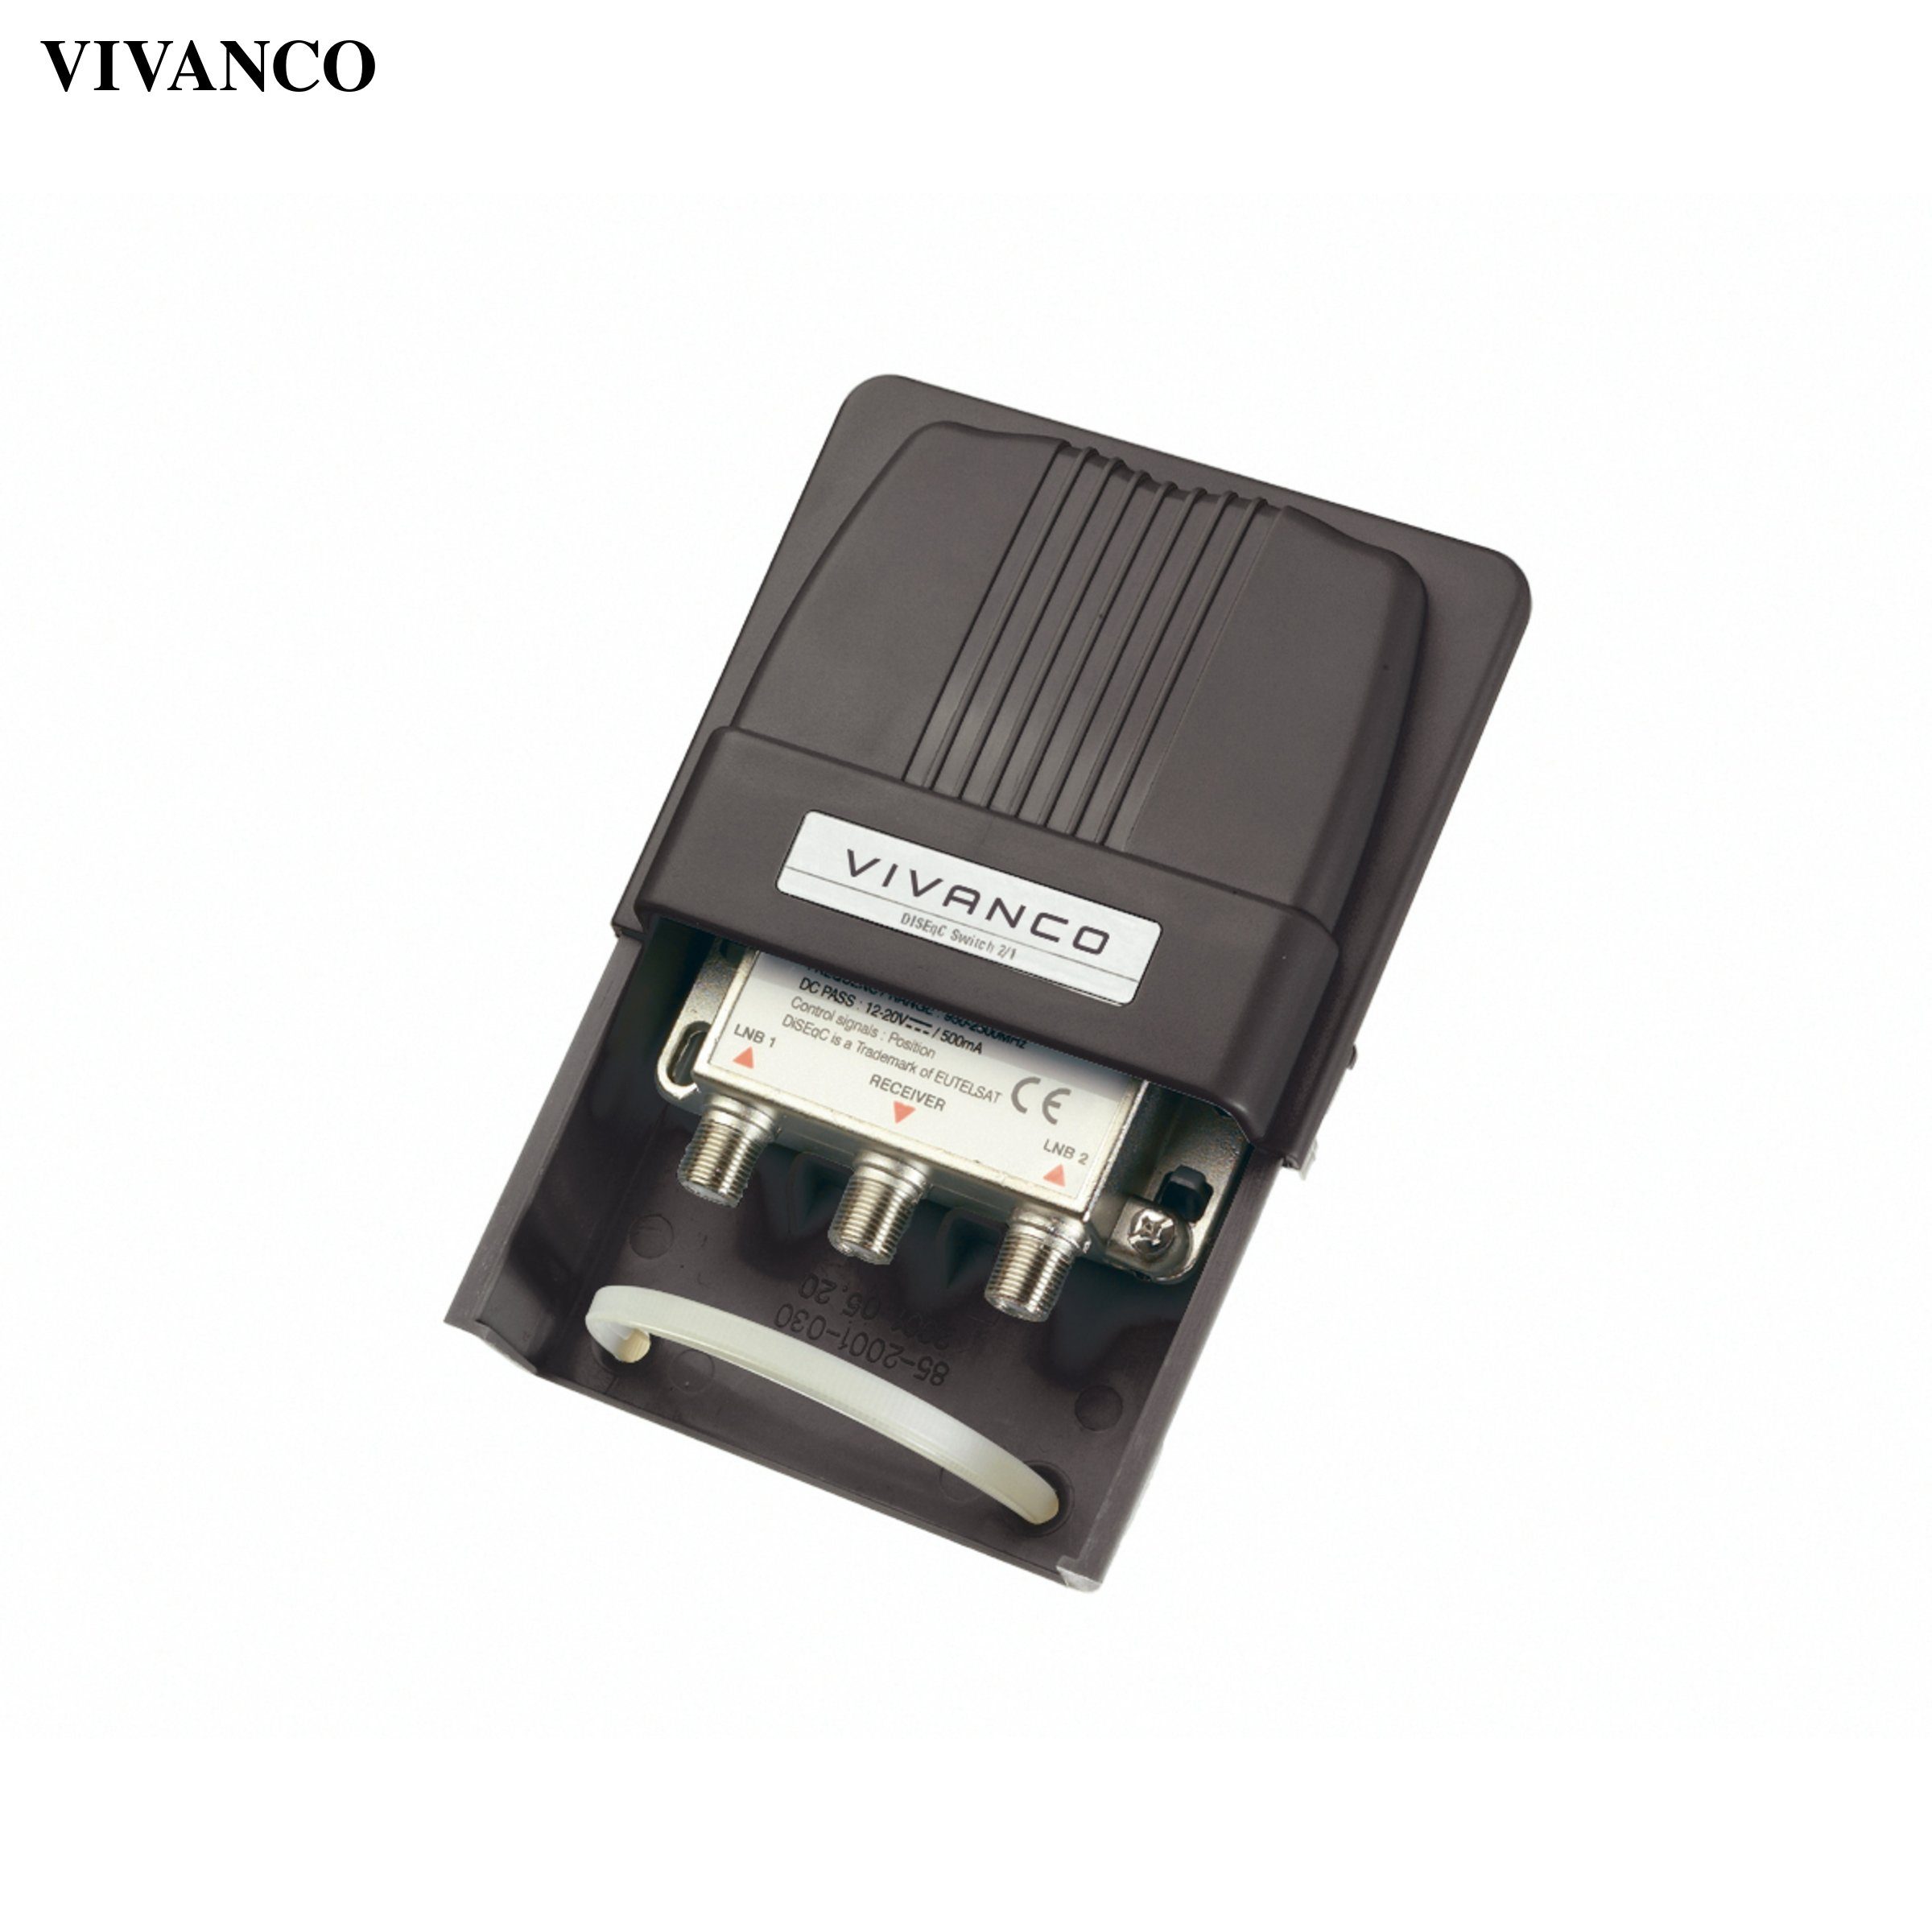 Vivanco Universal-Single-LNB (Mit Wetterschutzgehäuse)